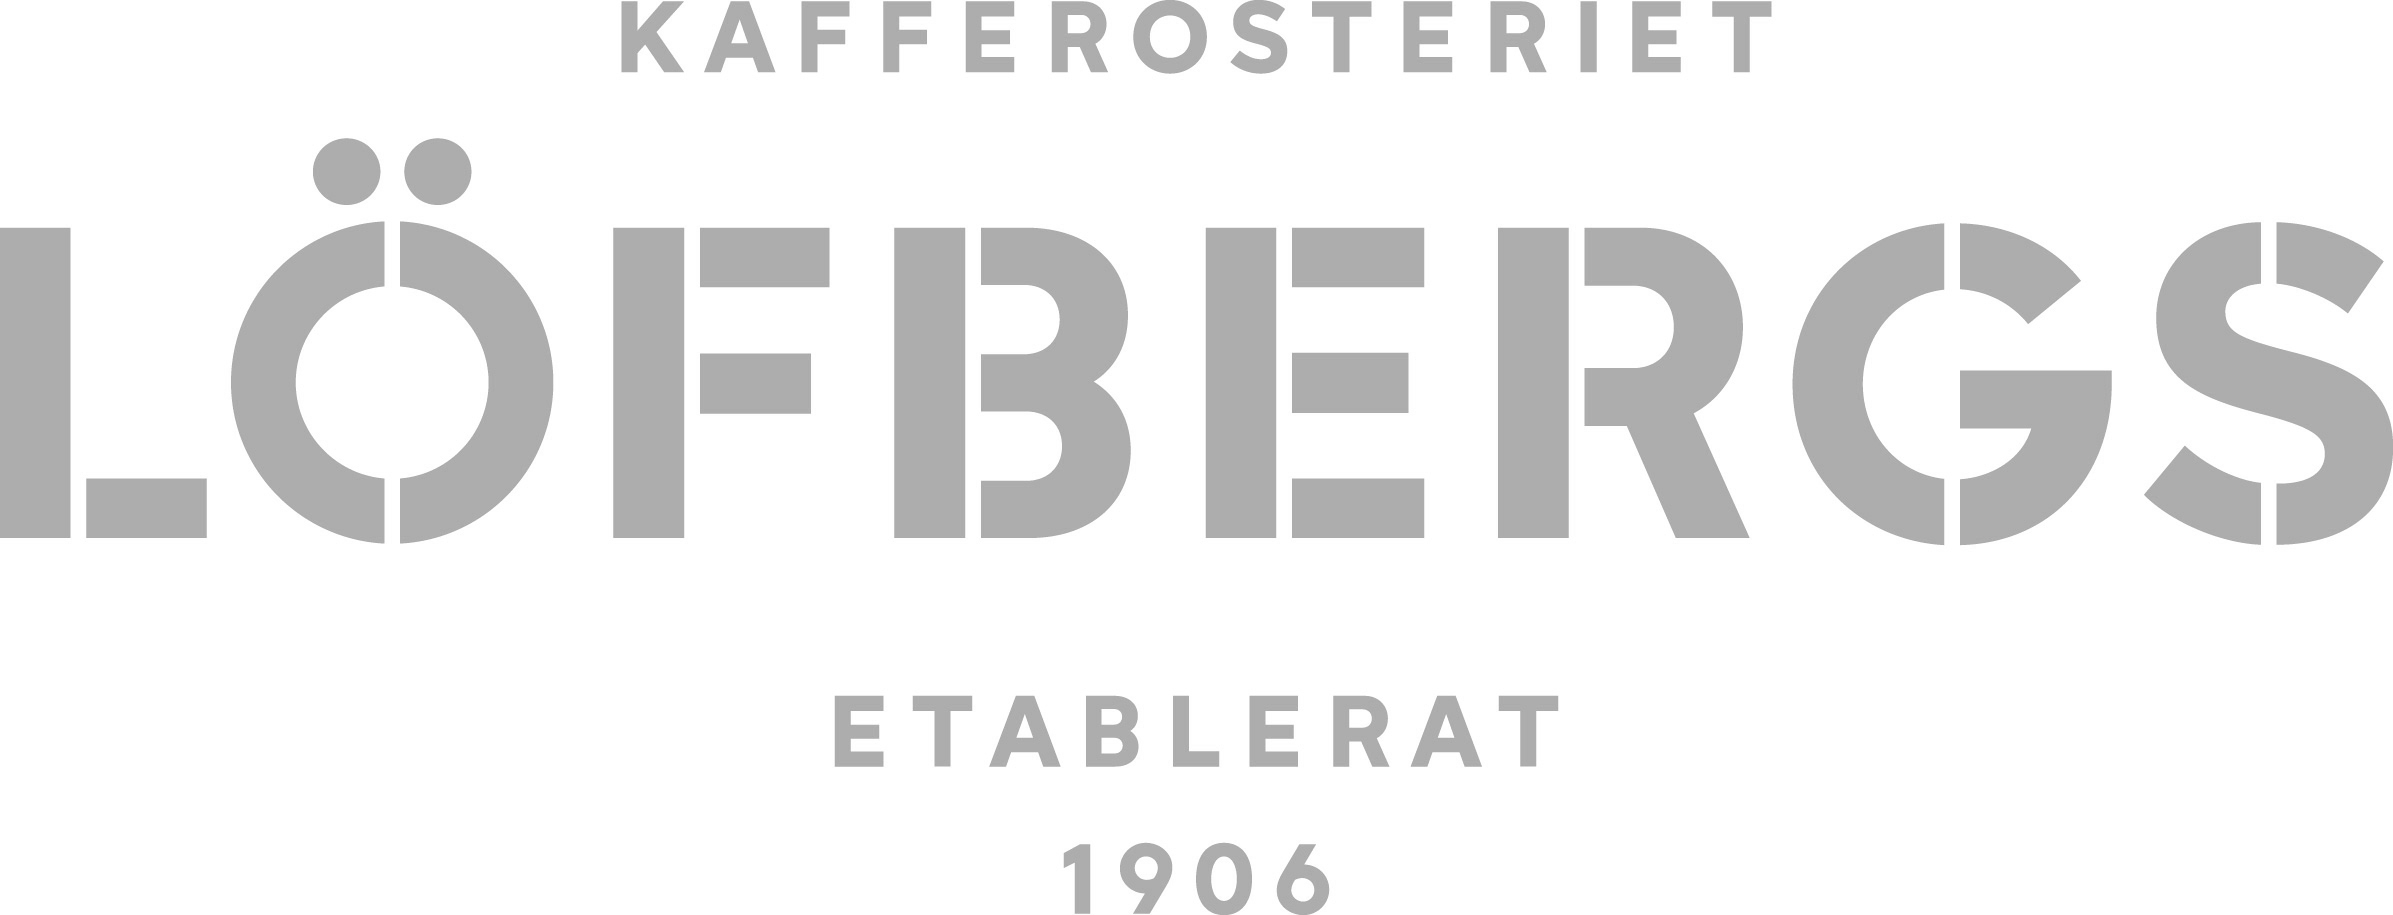 Lofbergs-logo kopiera.jpg